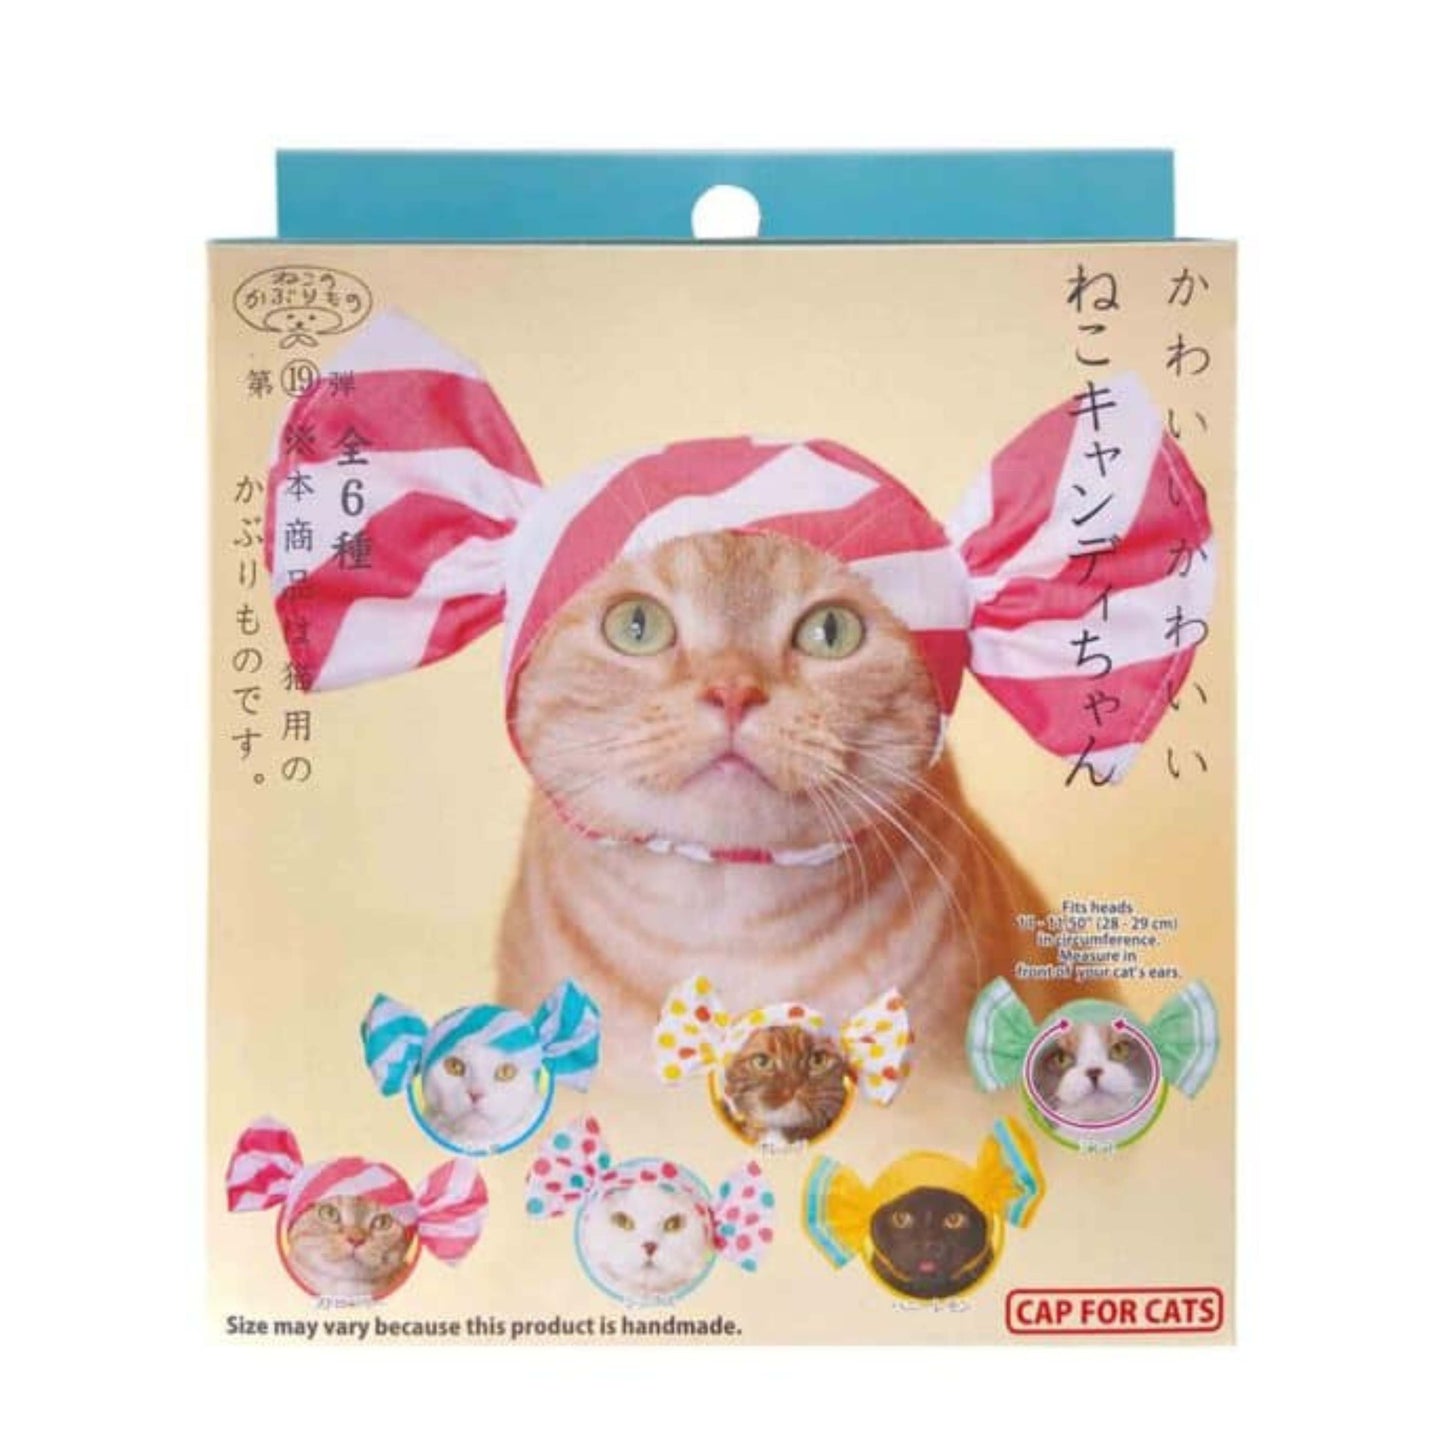 【New】Cat Cap Candy Series Blind Box Random Style